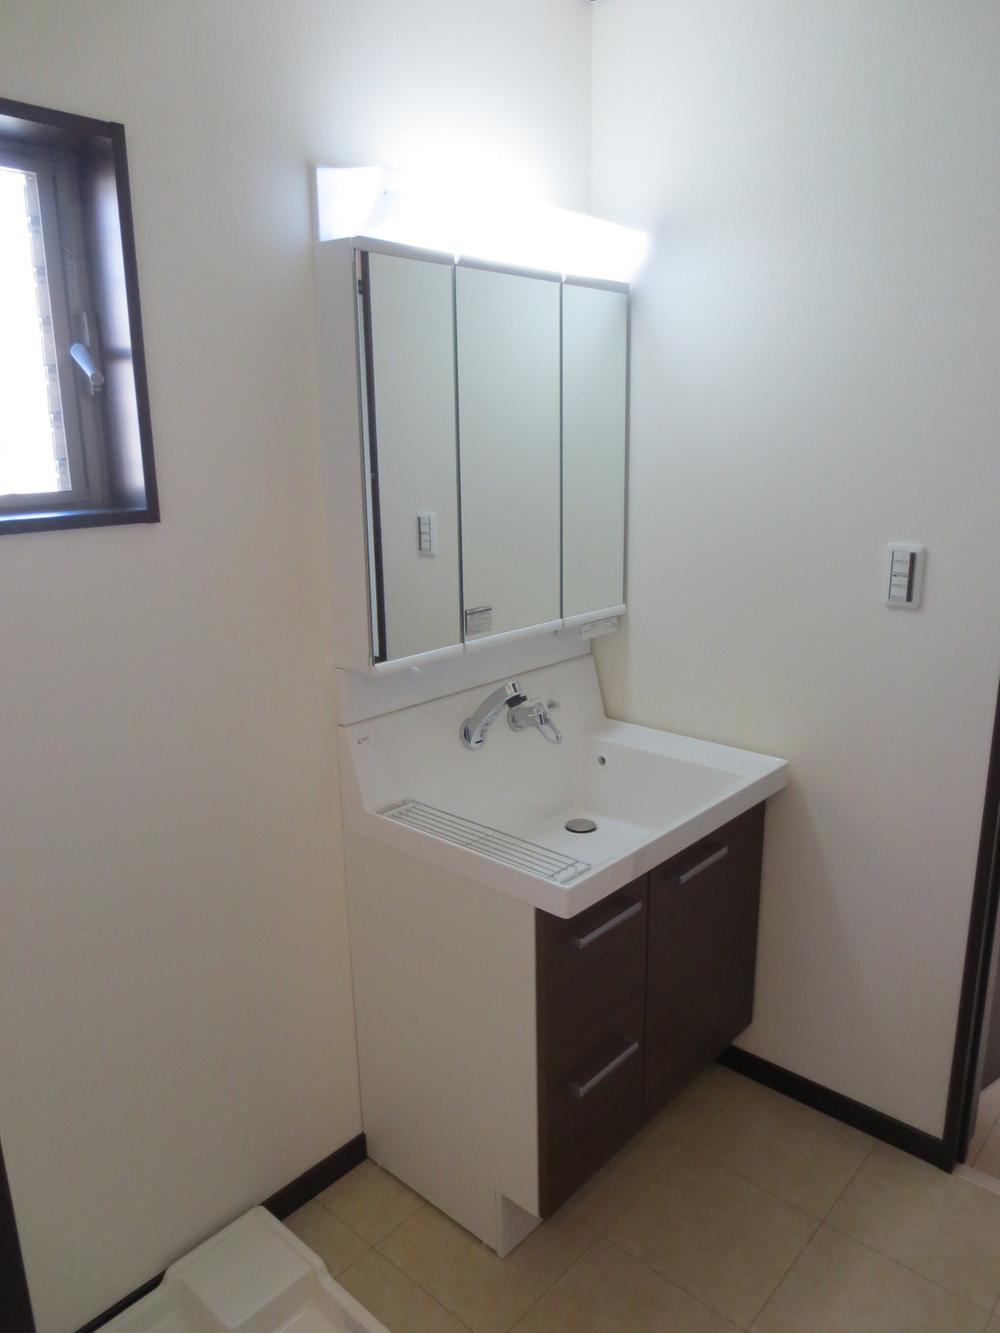 Wash basin, toilet. Vanity construction cases